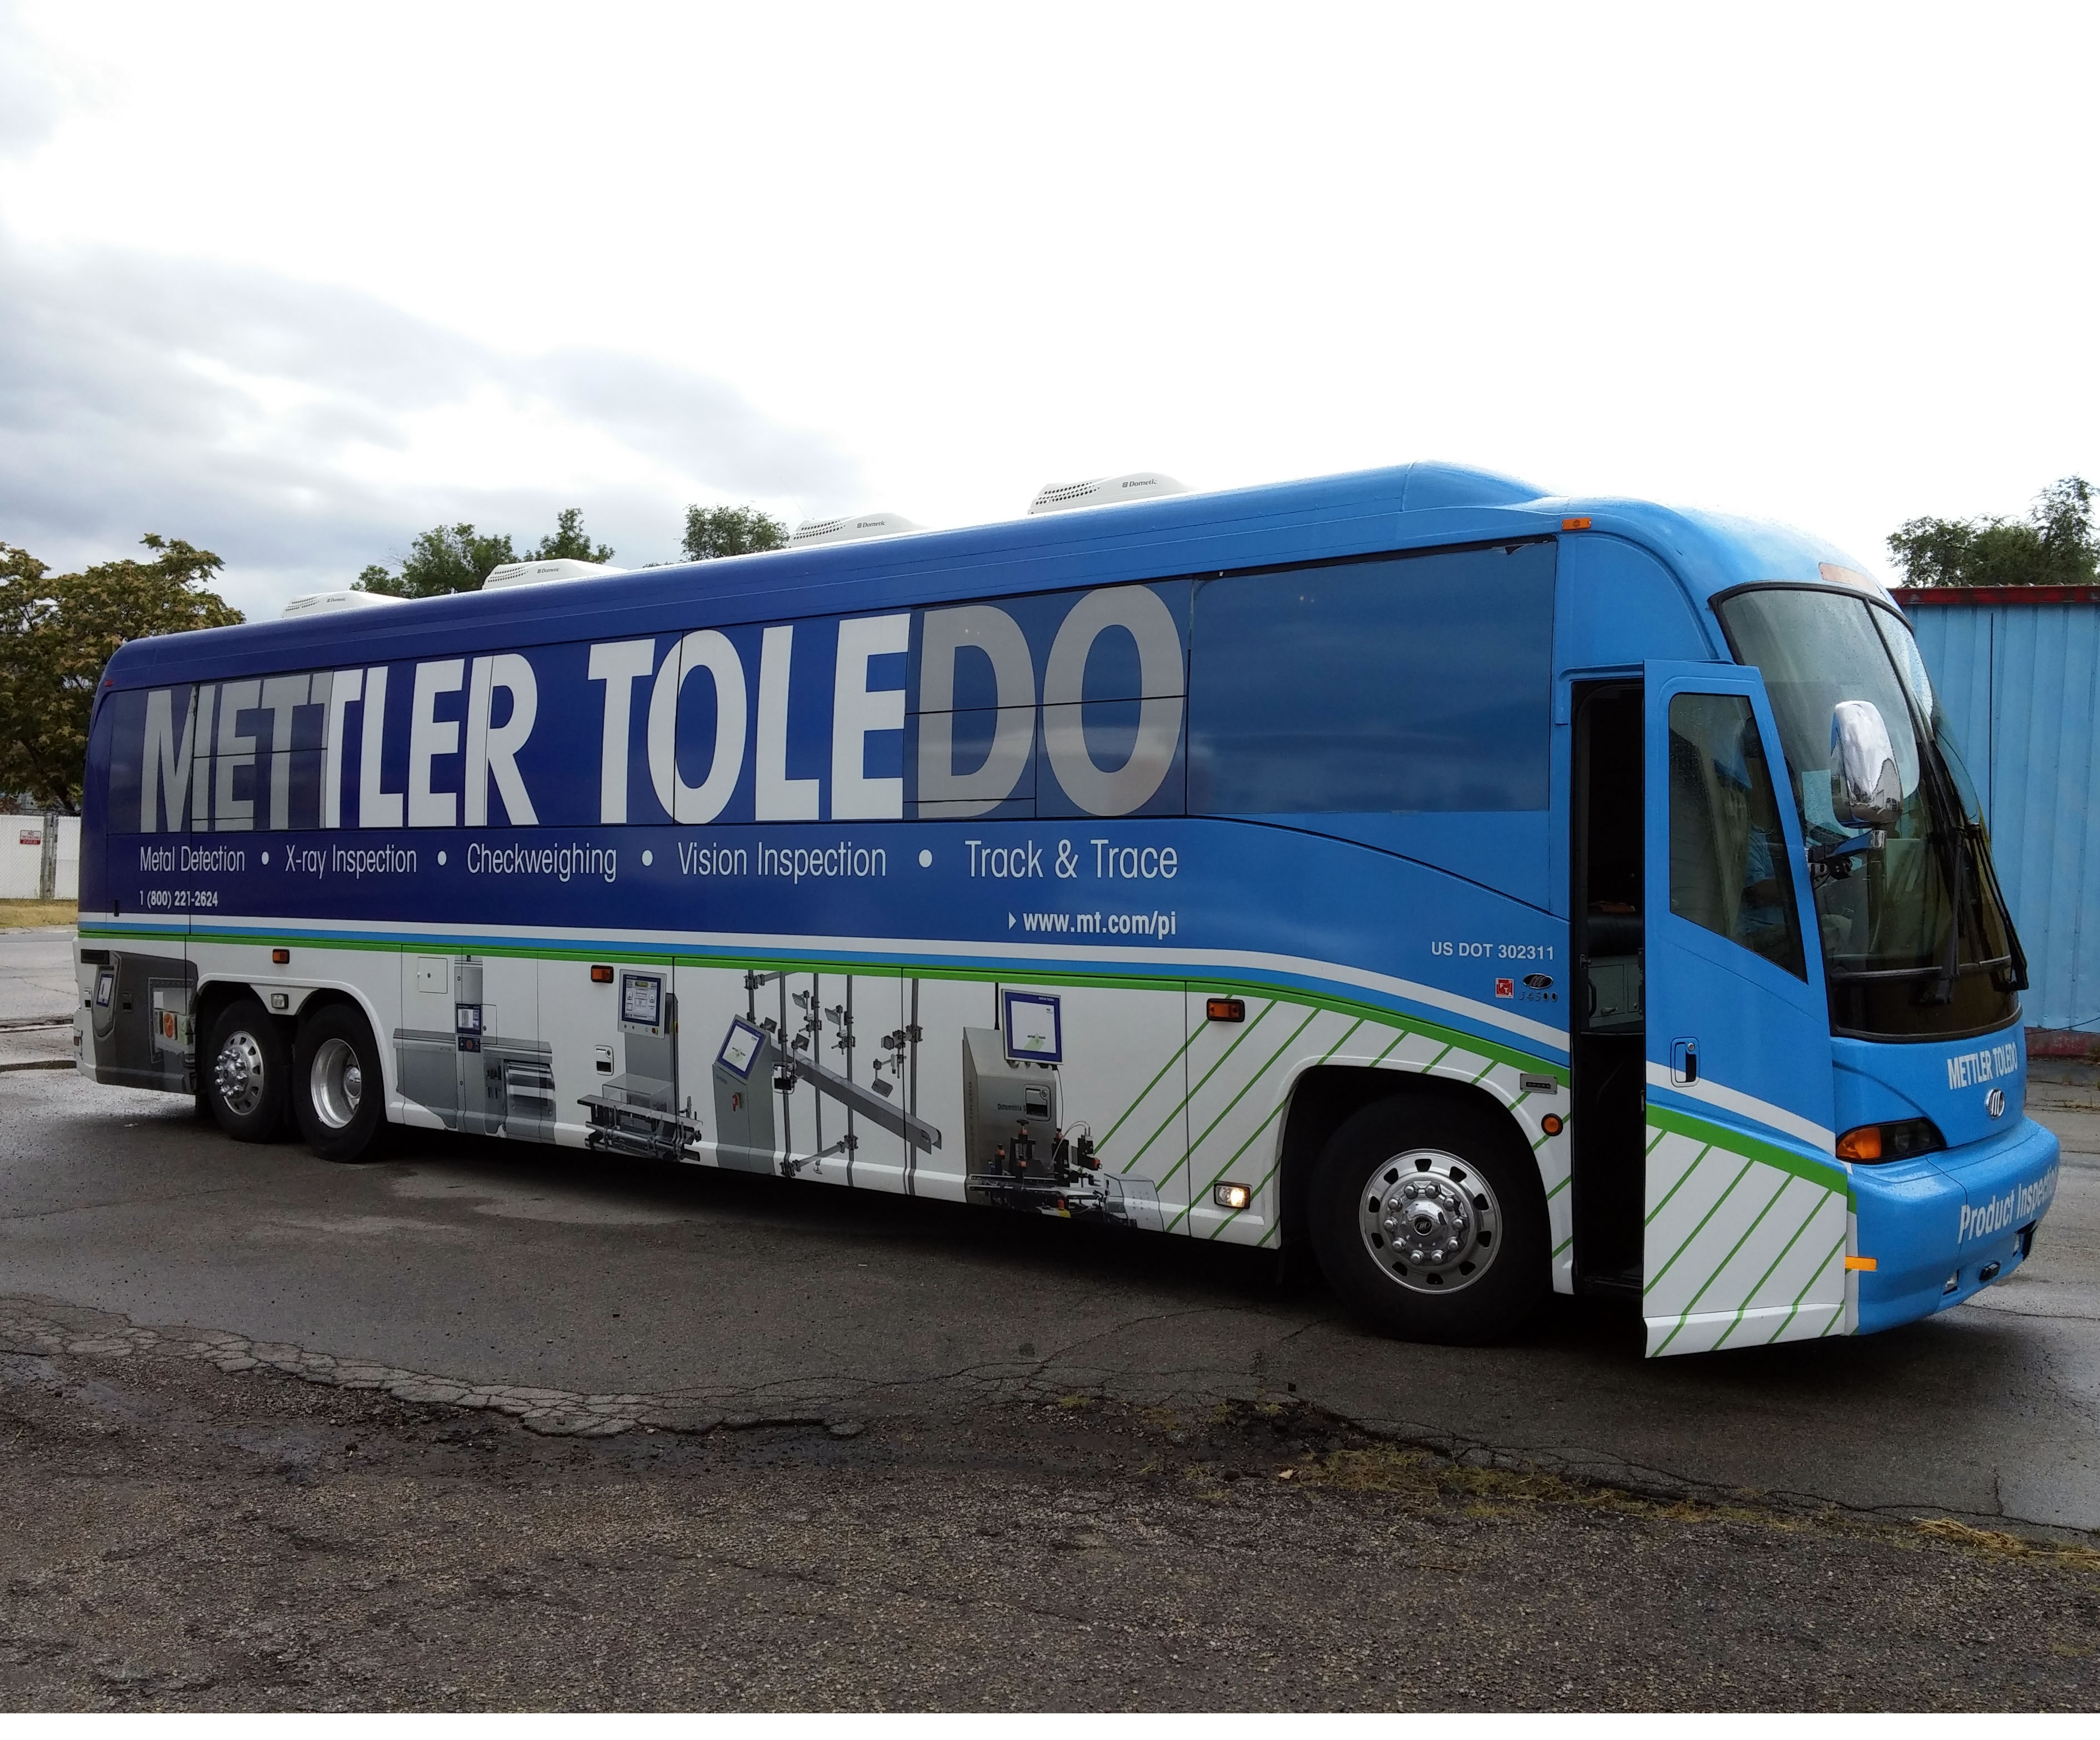 METTLER TOLEDO Bus Gives Propeller a Visit - Propeller Inc